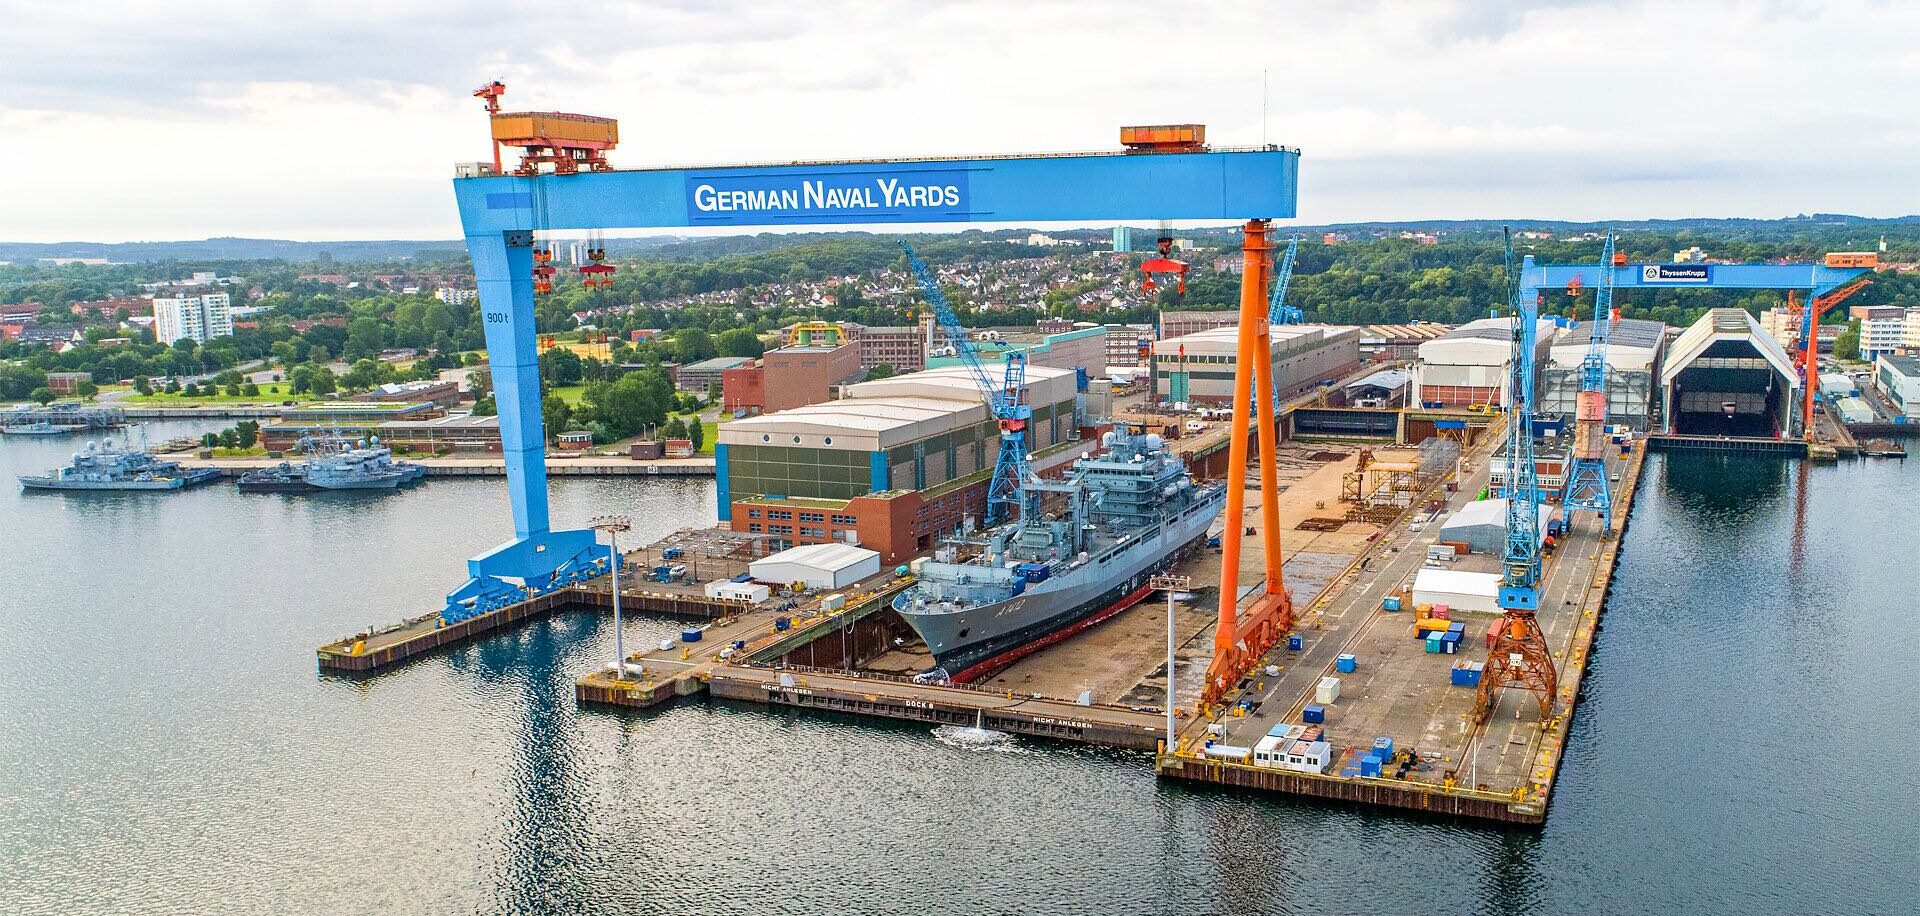 Plattform zur Munitionsentsorgung geplant - German Naval Yards Kiel. Foto: GNY